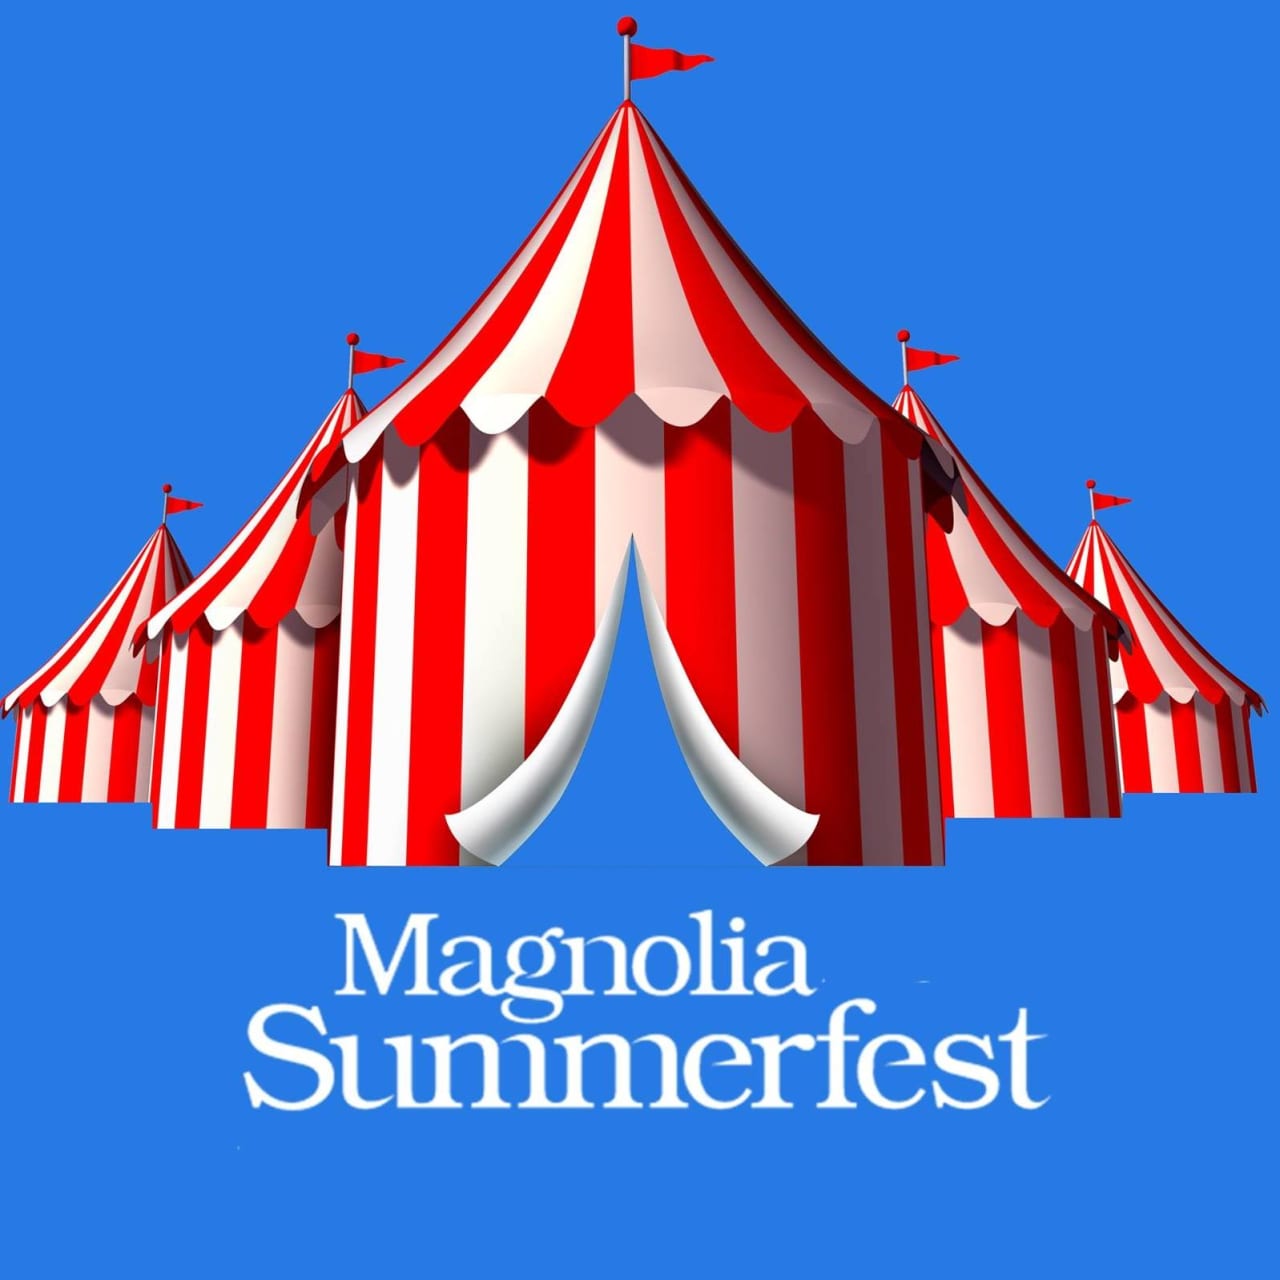 Magnolia Summerfest